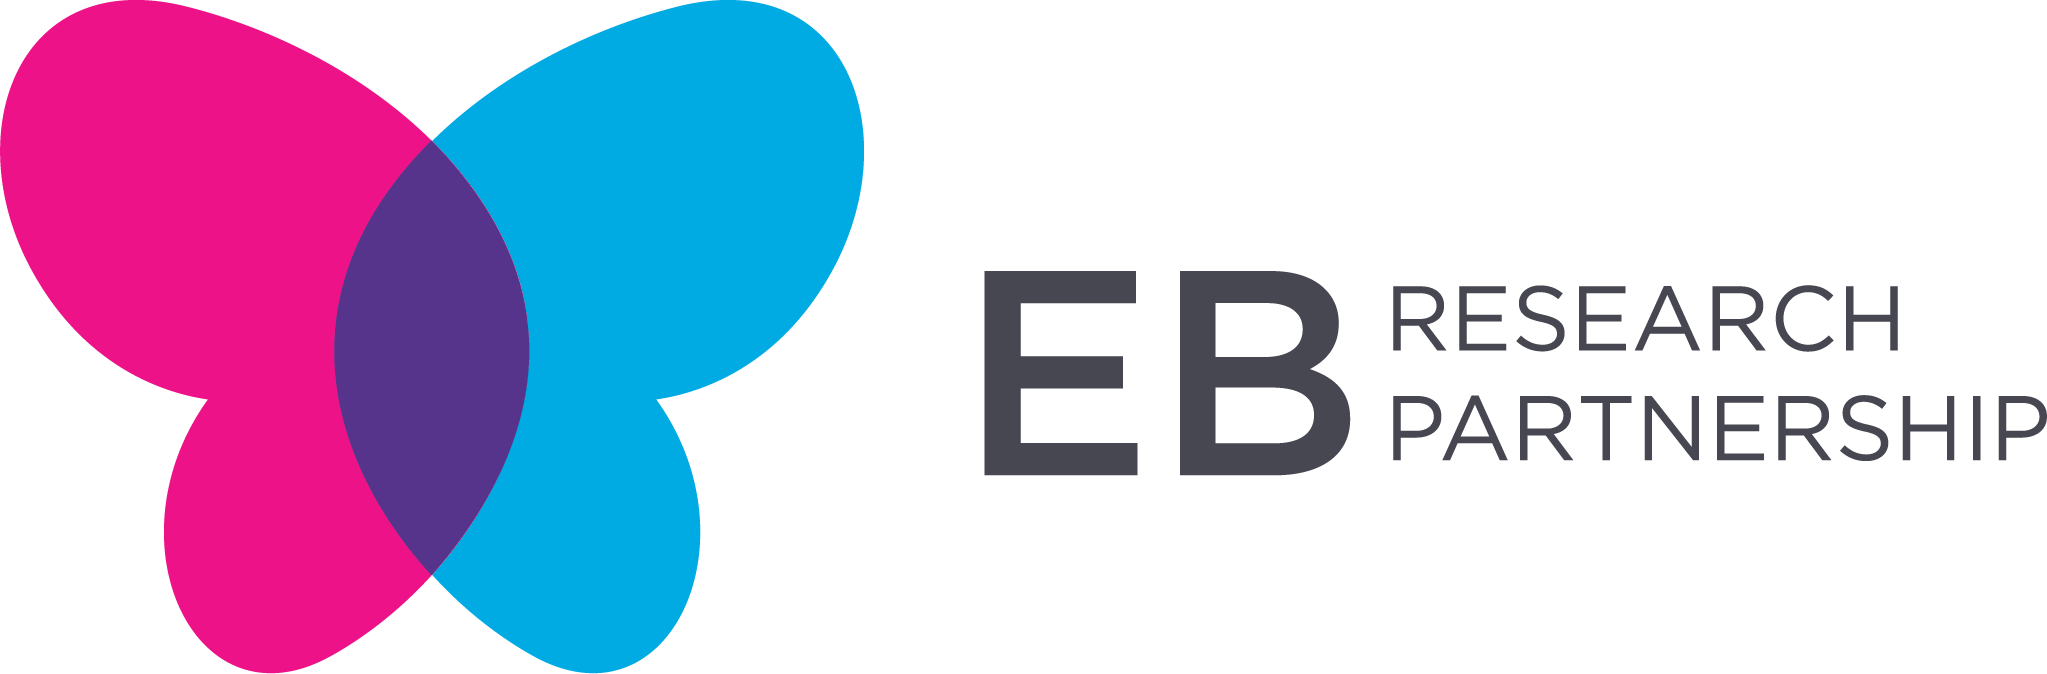 EB Research Partnership Logo